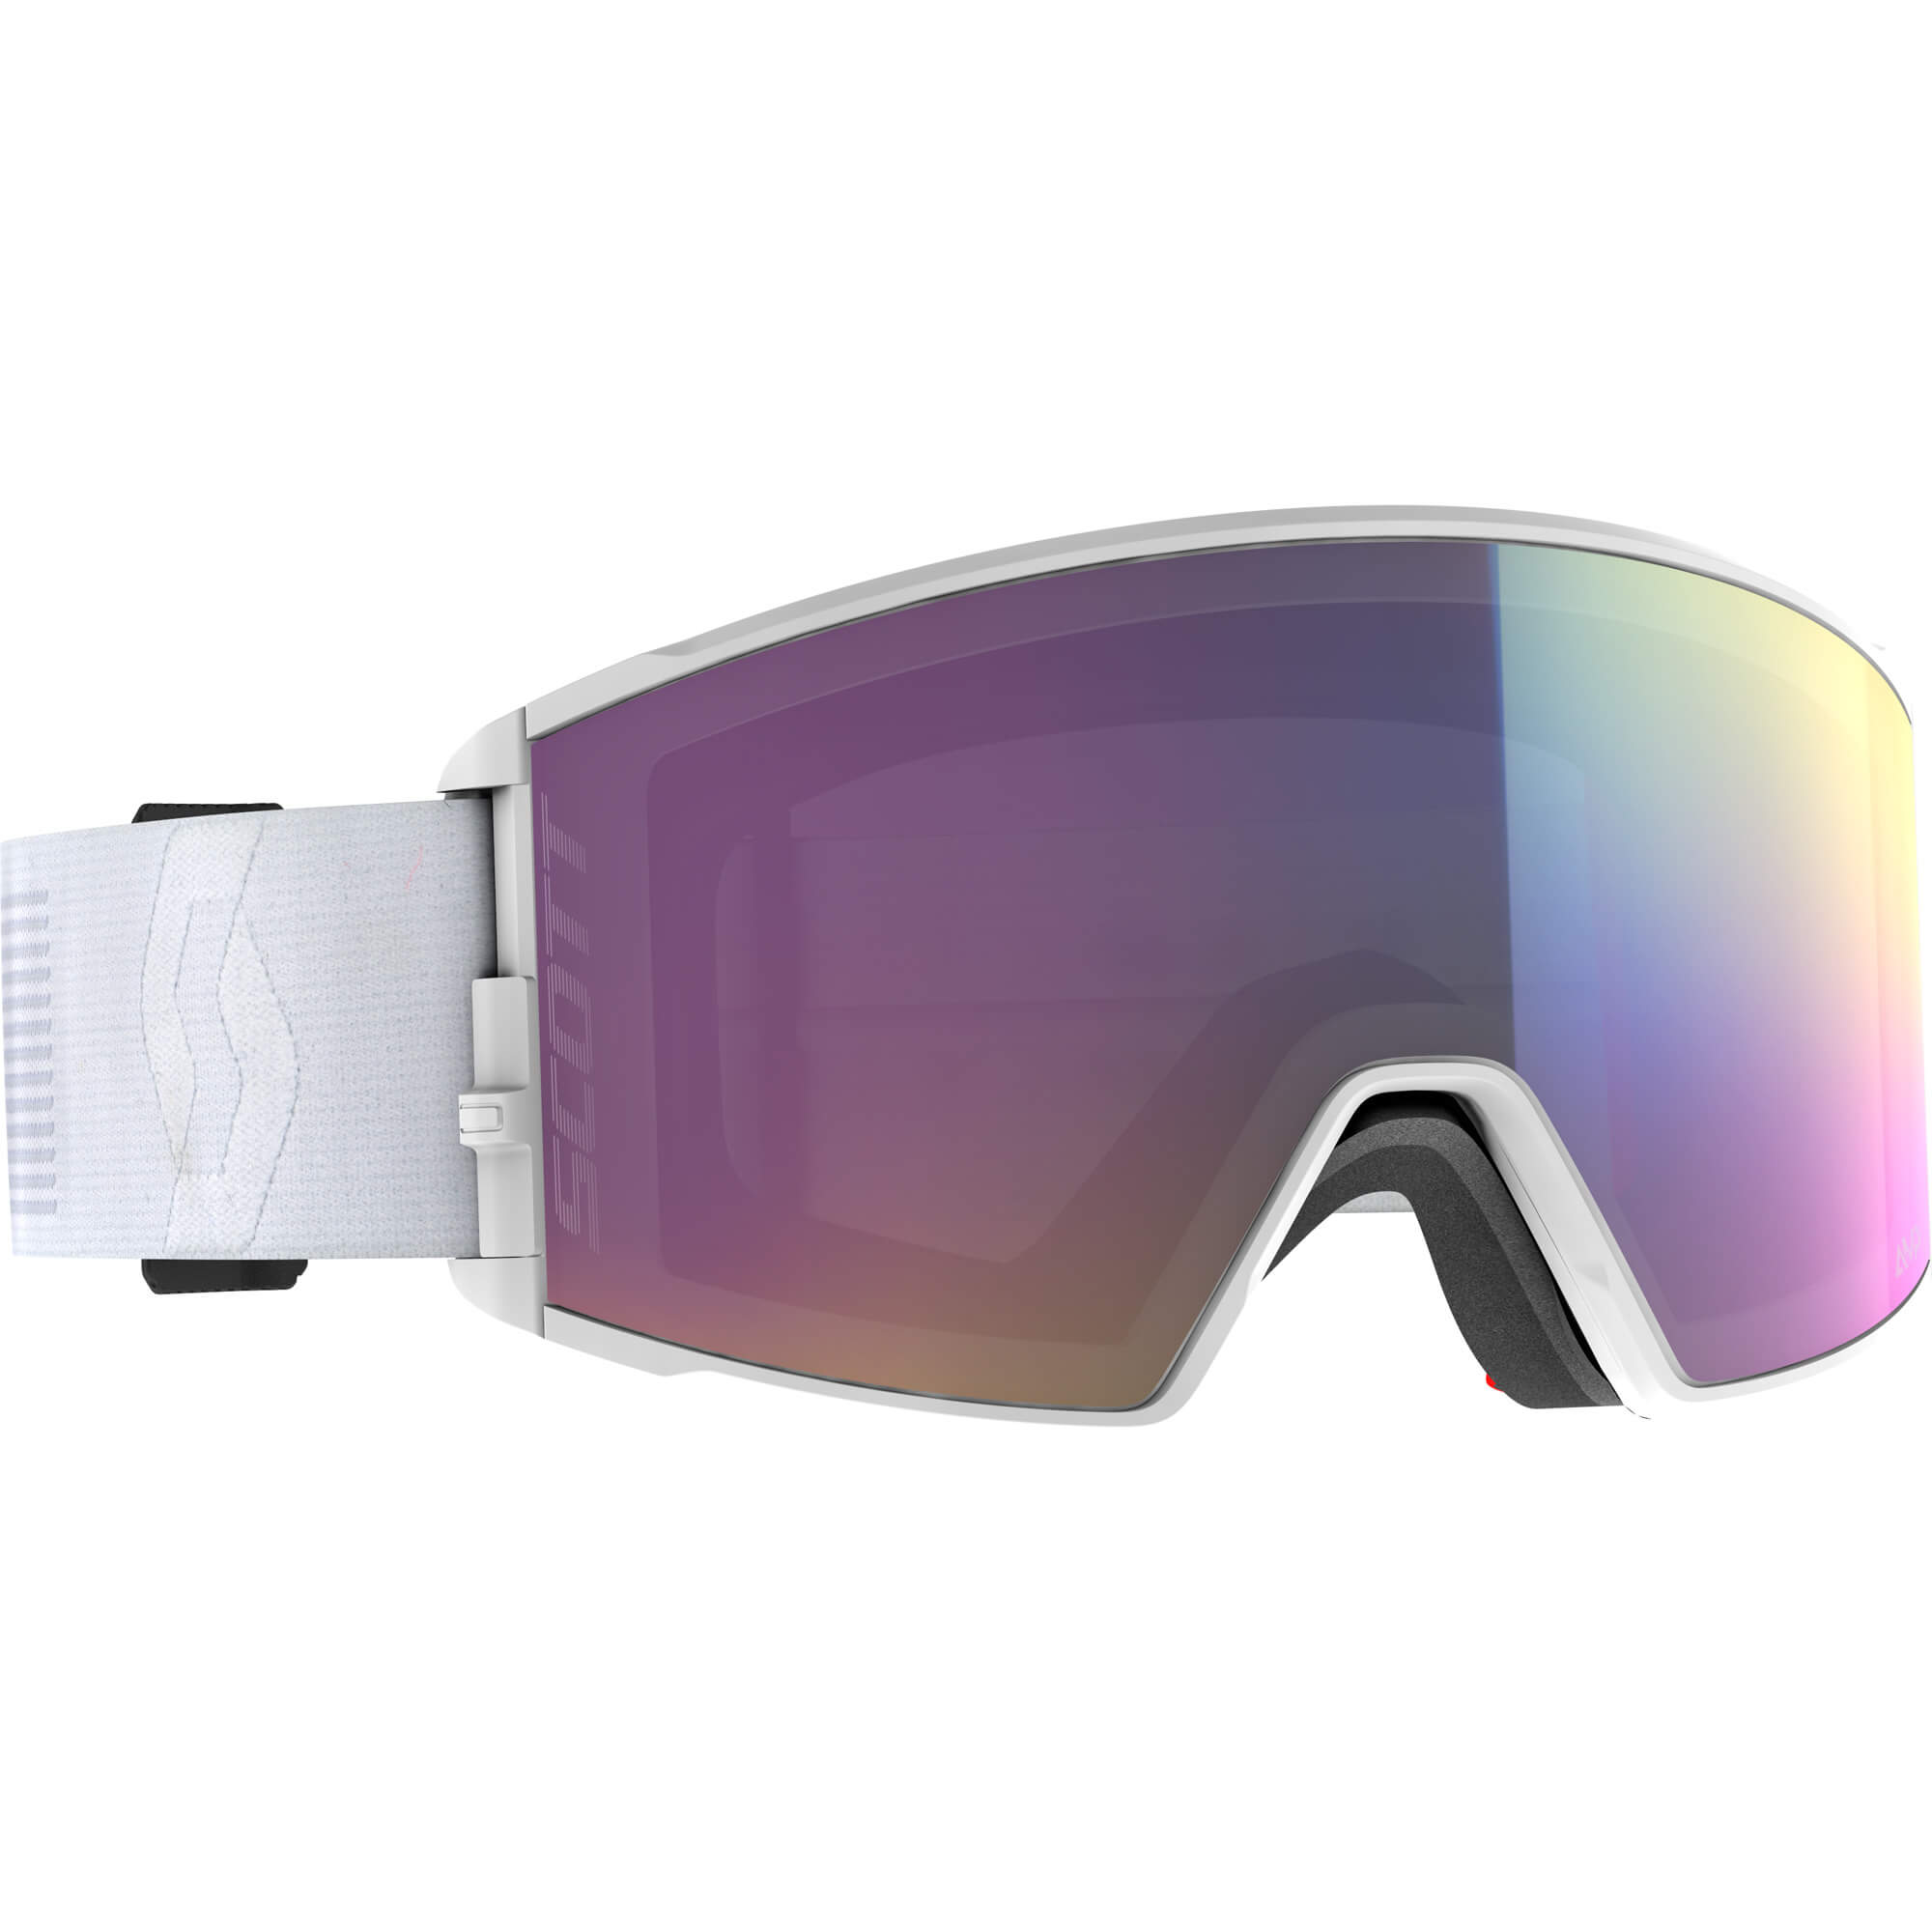 Photos - Ski Goggles Scott React Ski/Snowboard Goggles, Mineral White/Enhancer Teal Chrome 4145 